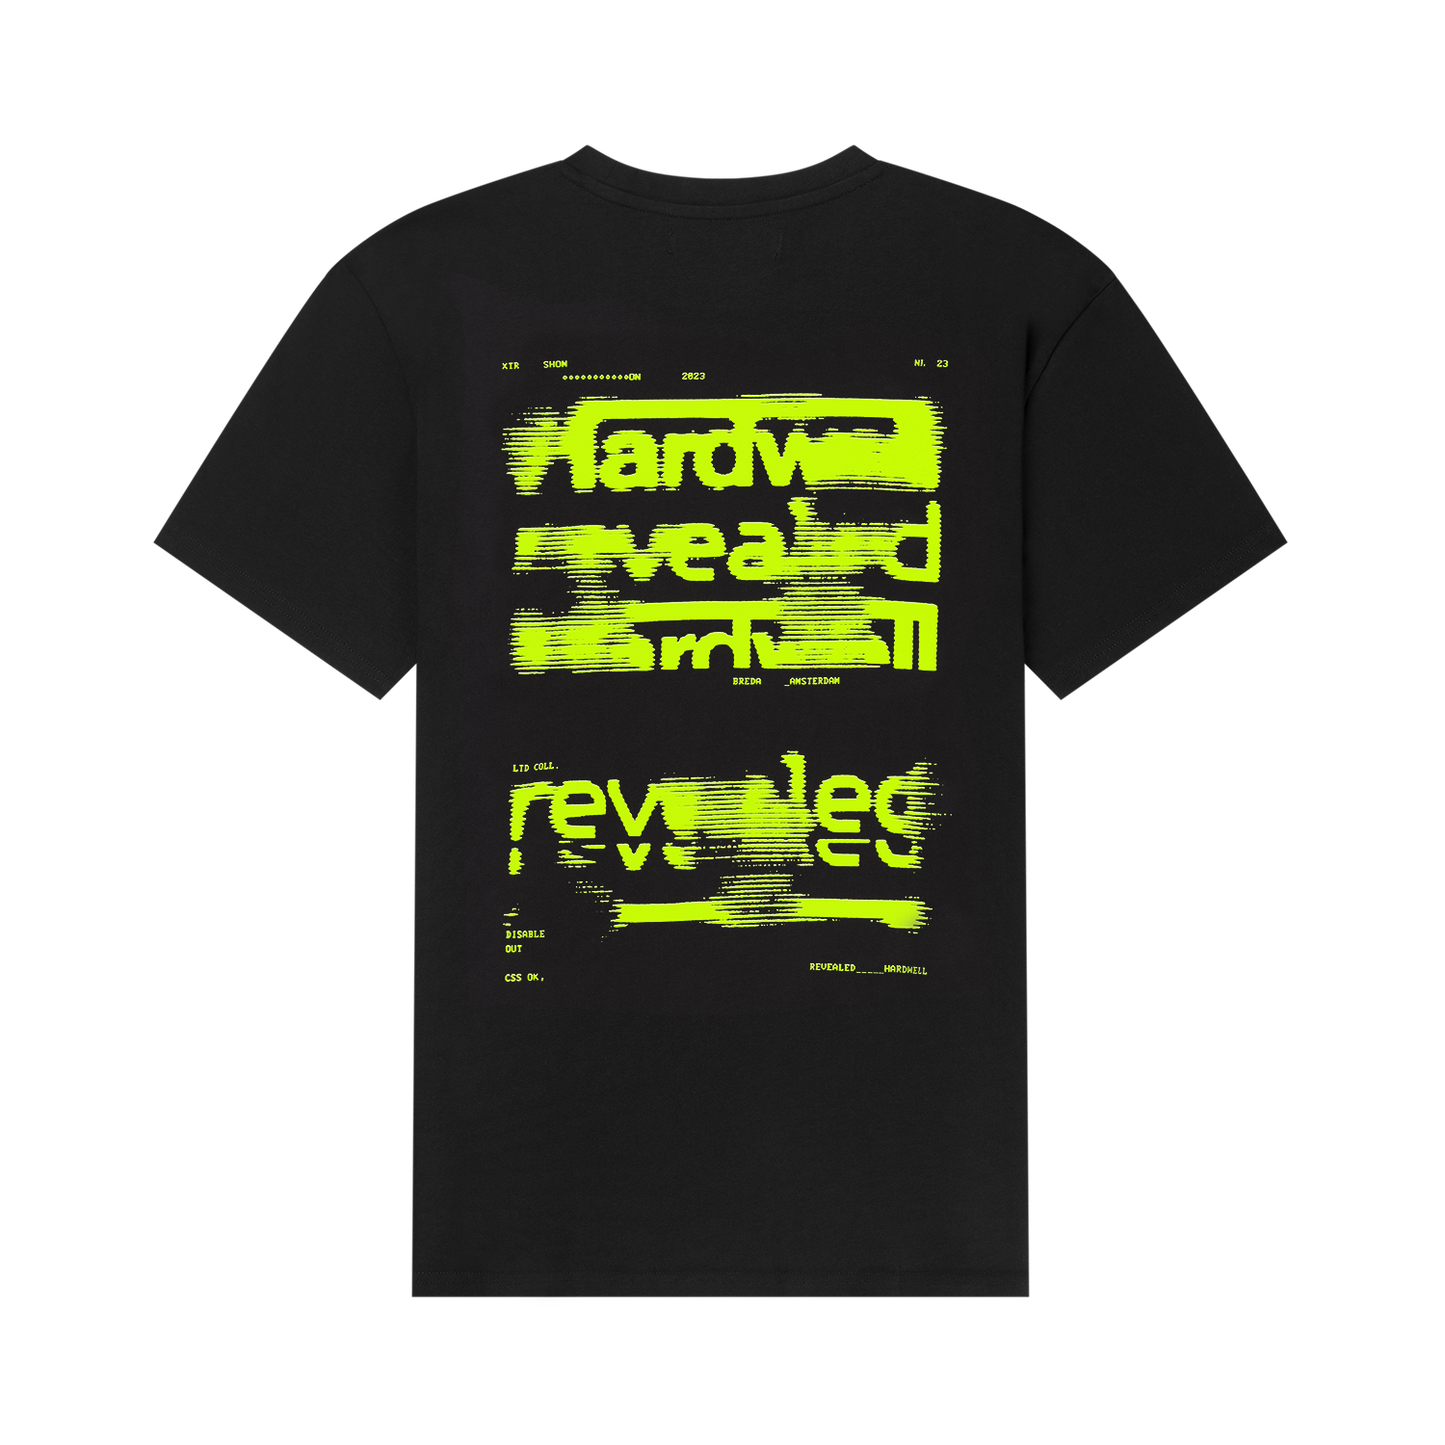 Hardwell X Revealed Fluted Tee